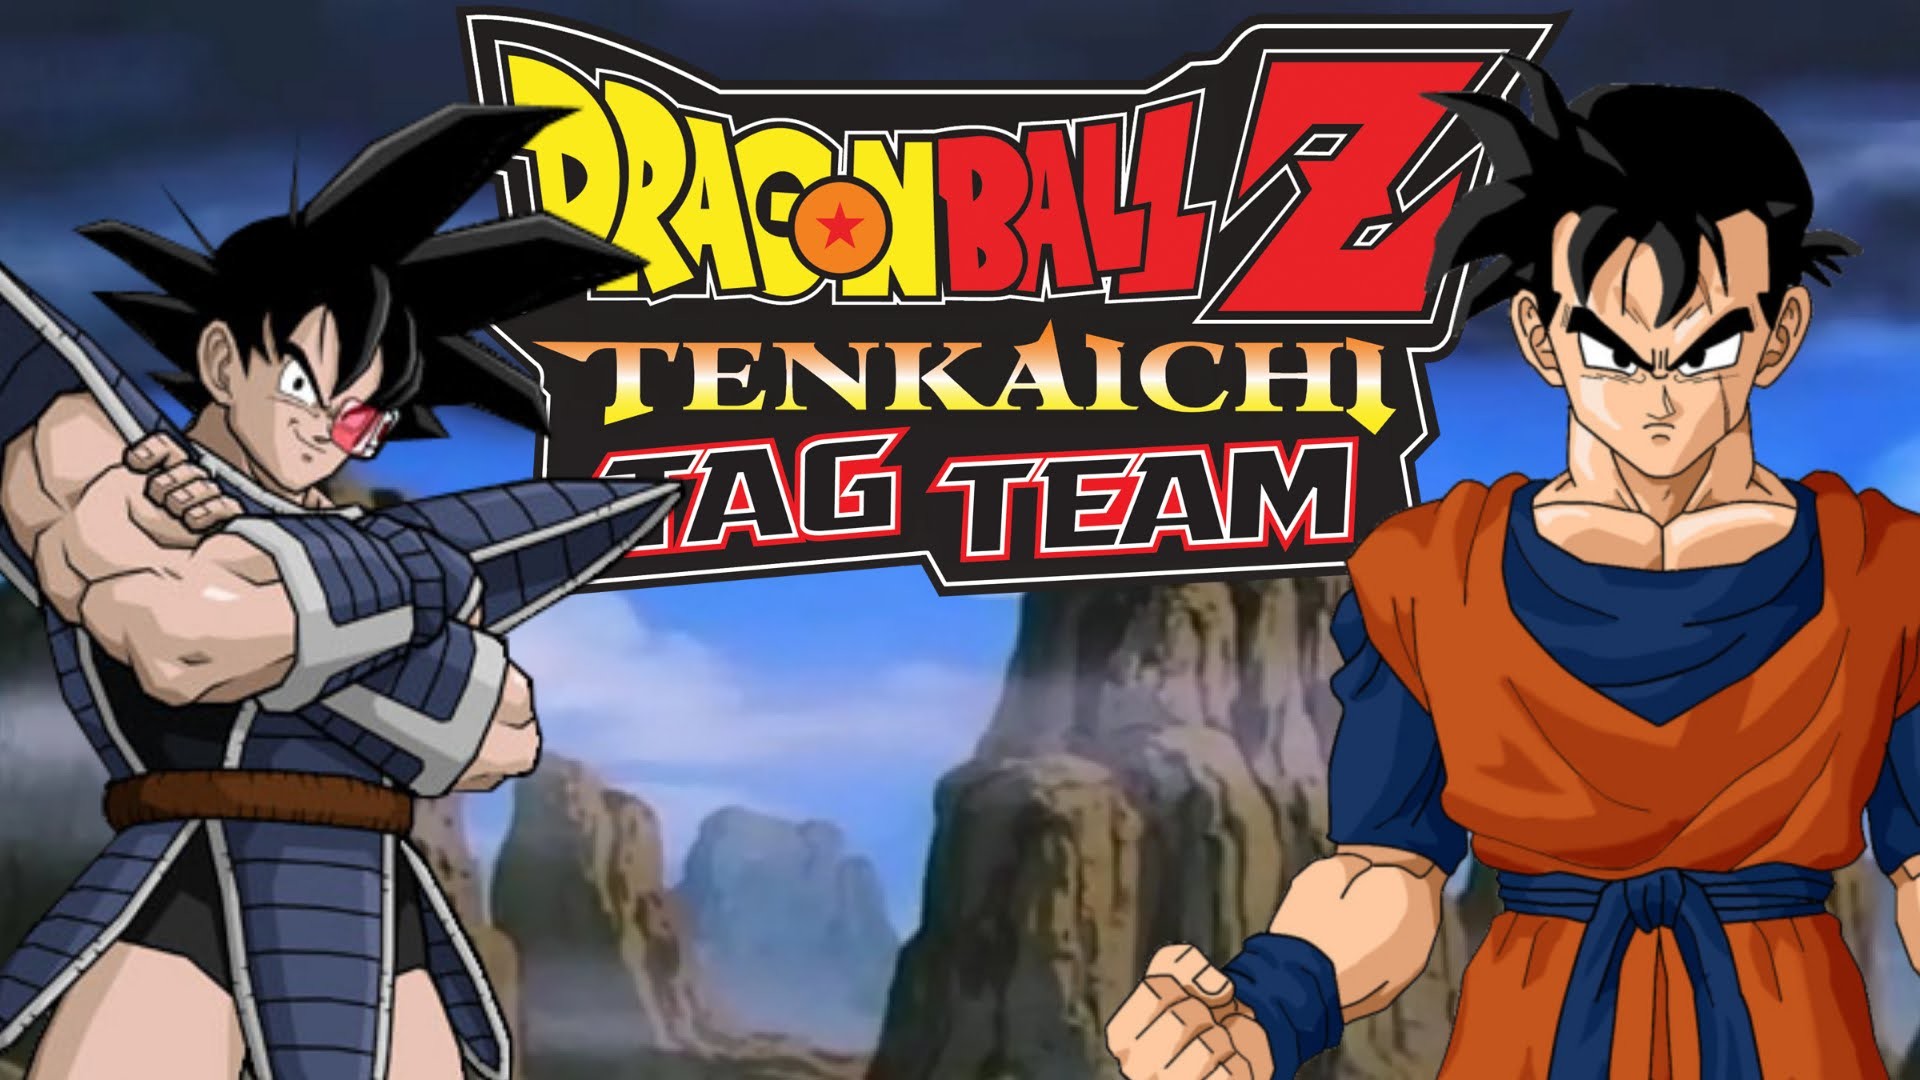 Turles Vs. Future Gohan Dragon Ball z tenkaichi tag team mods Xenoverse 2 Hype – YouTube